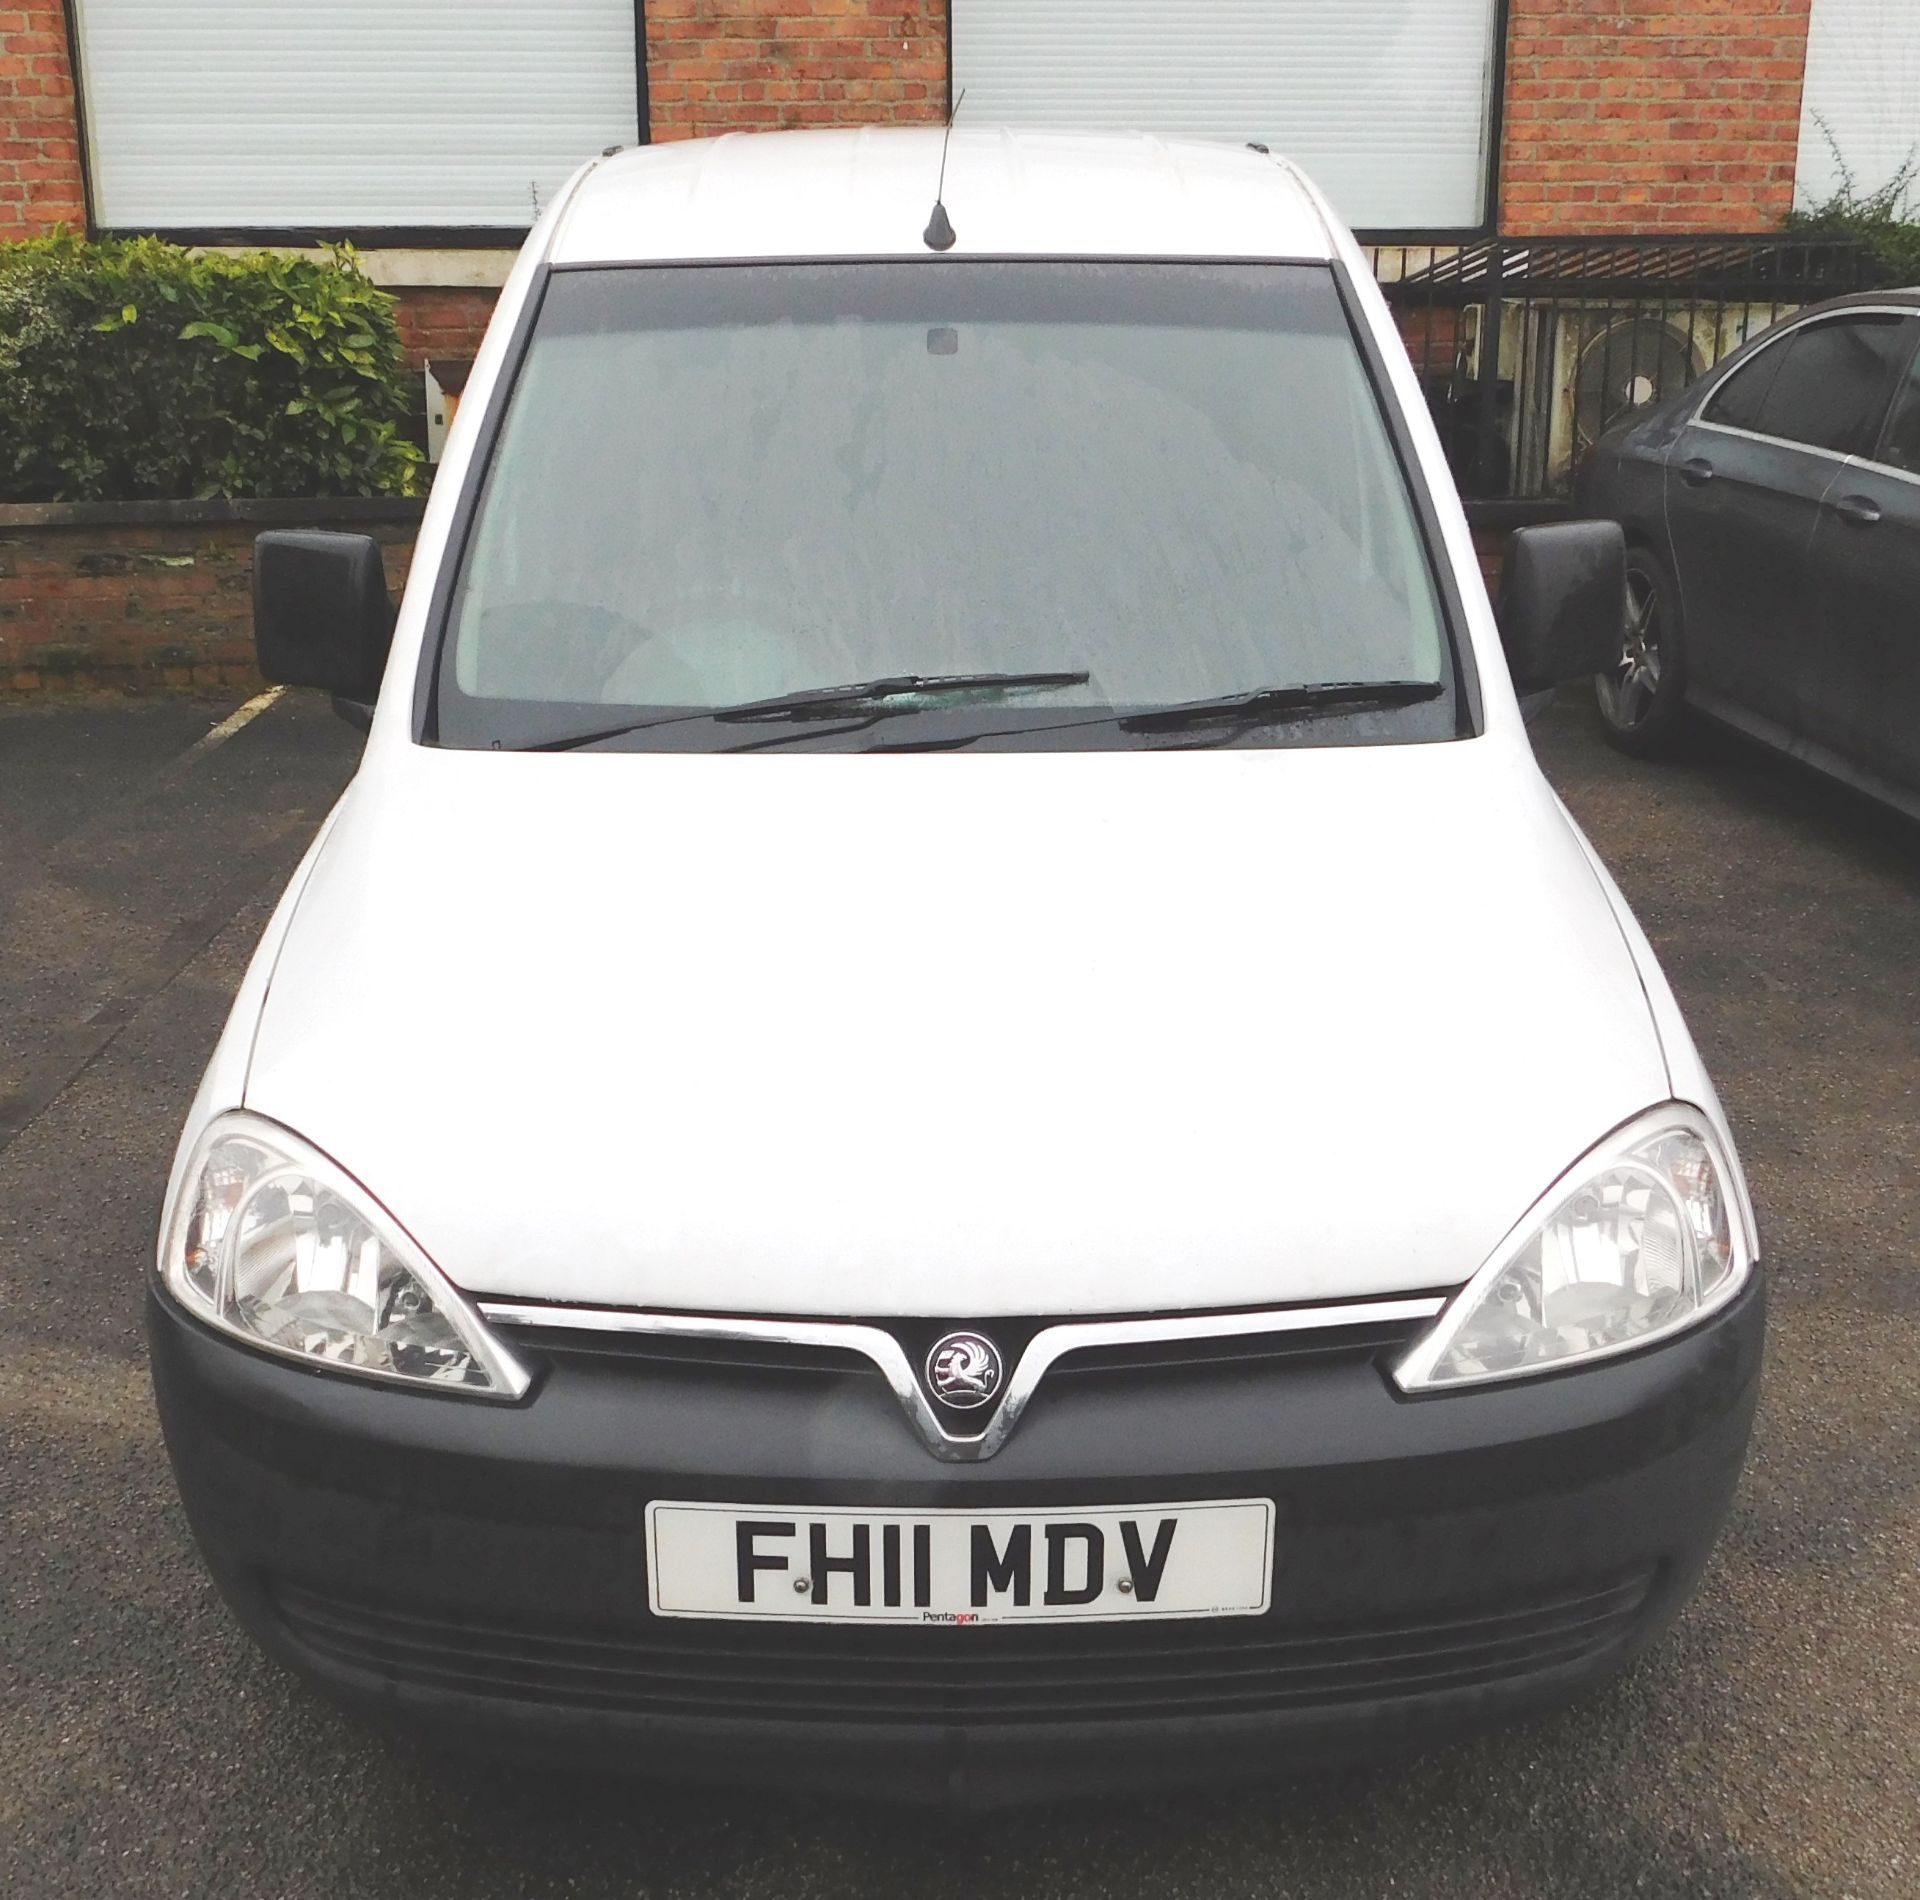 Vauxhall Combo 1.2CDTI Van, Registration FH11 MDV, - Image 2 of 10